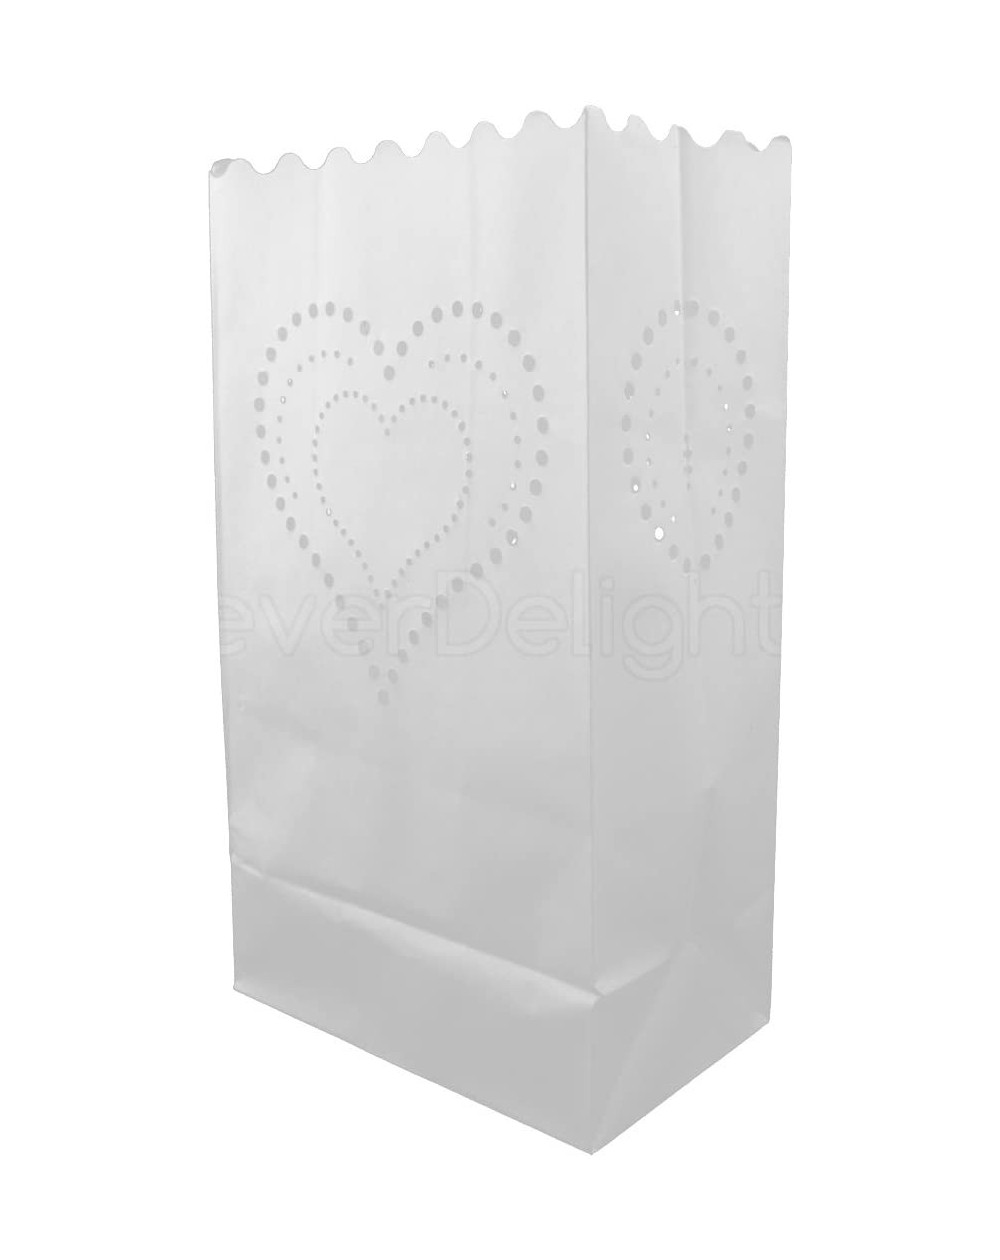 Luminarias White Luminary Bags - 30 Count - Heart of Hearts Design - Wedding Party Christmas Holiday Luminaria - C011MDB0TBL ...